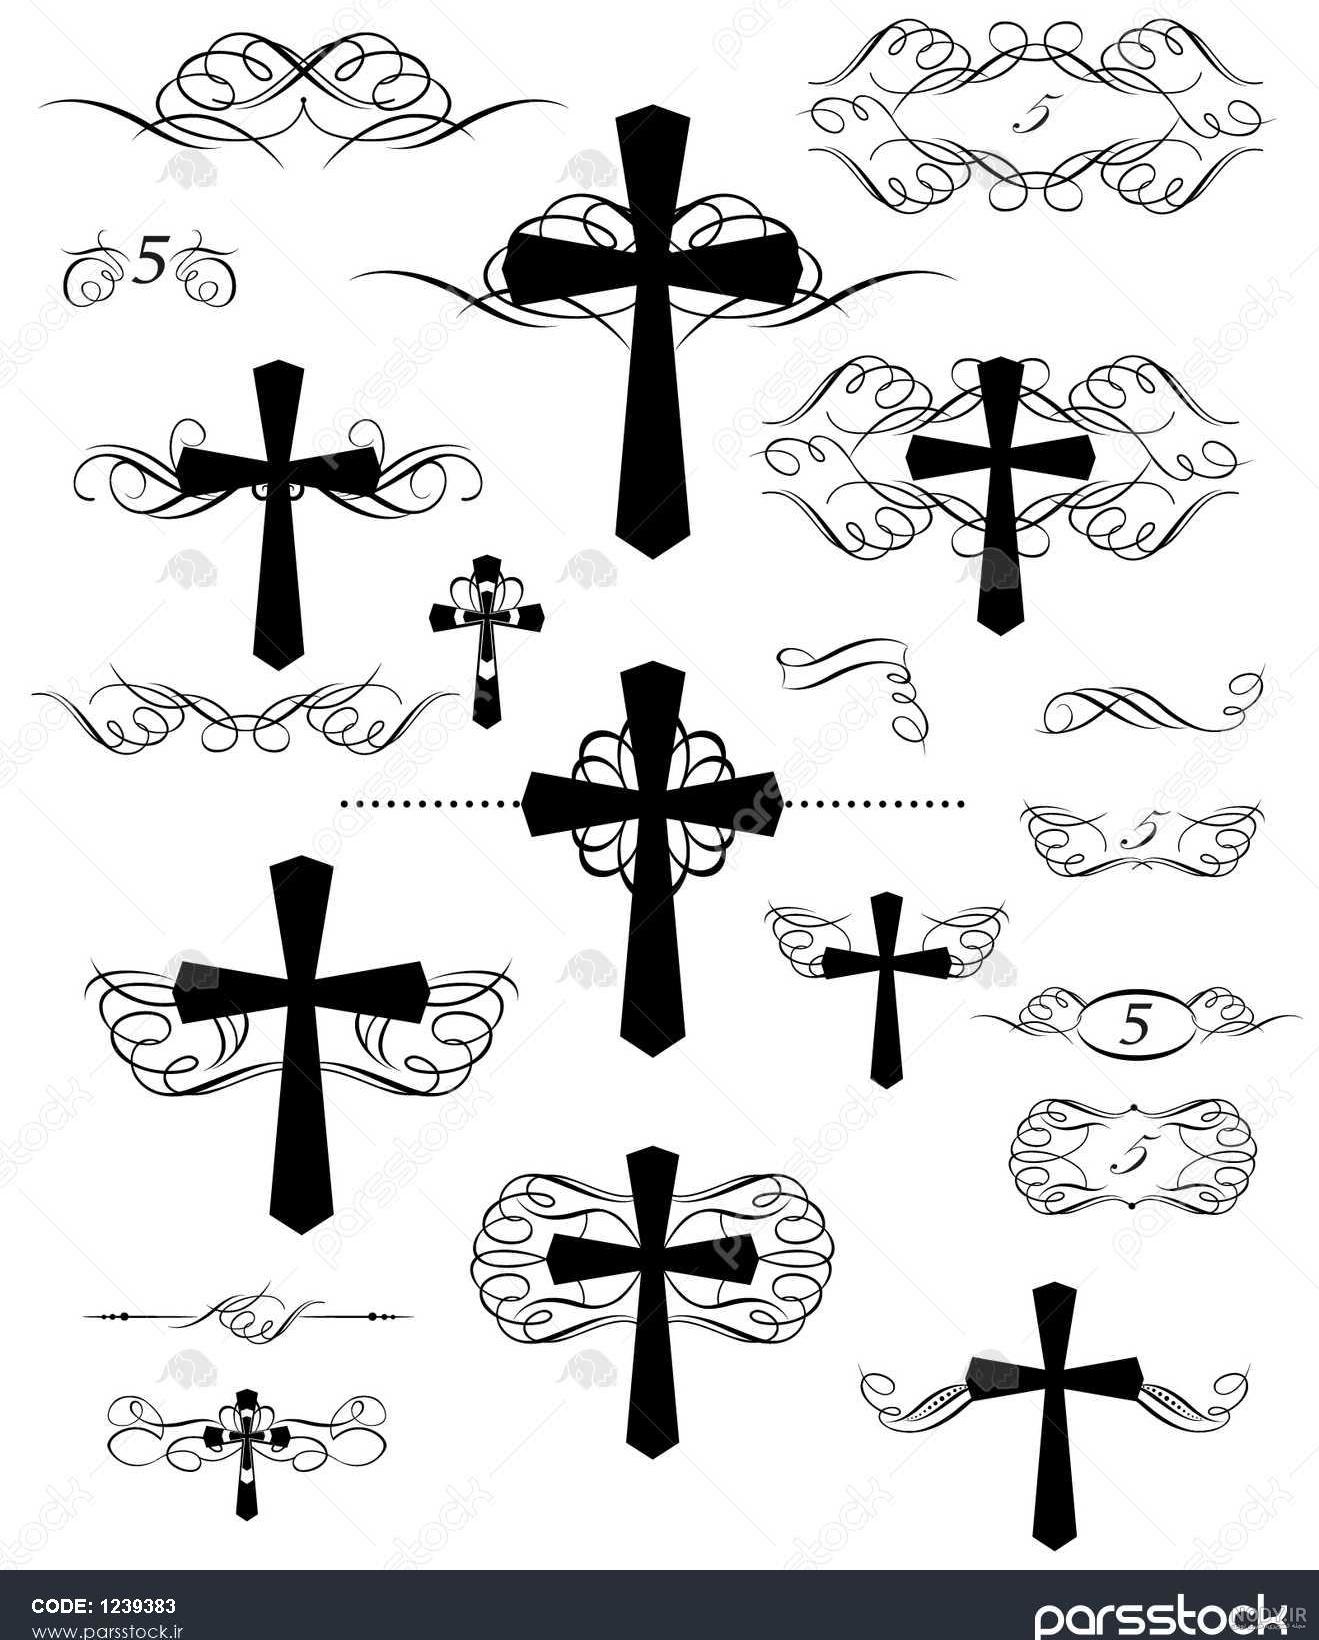 مفهوم علامت صلیب در دفینه